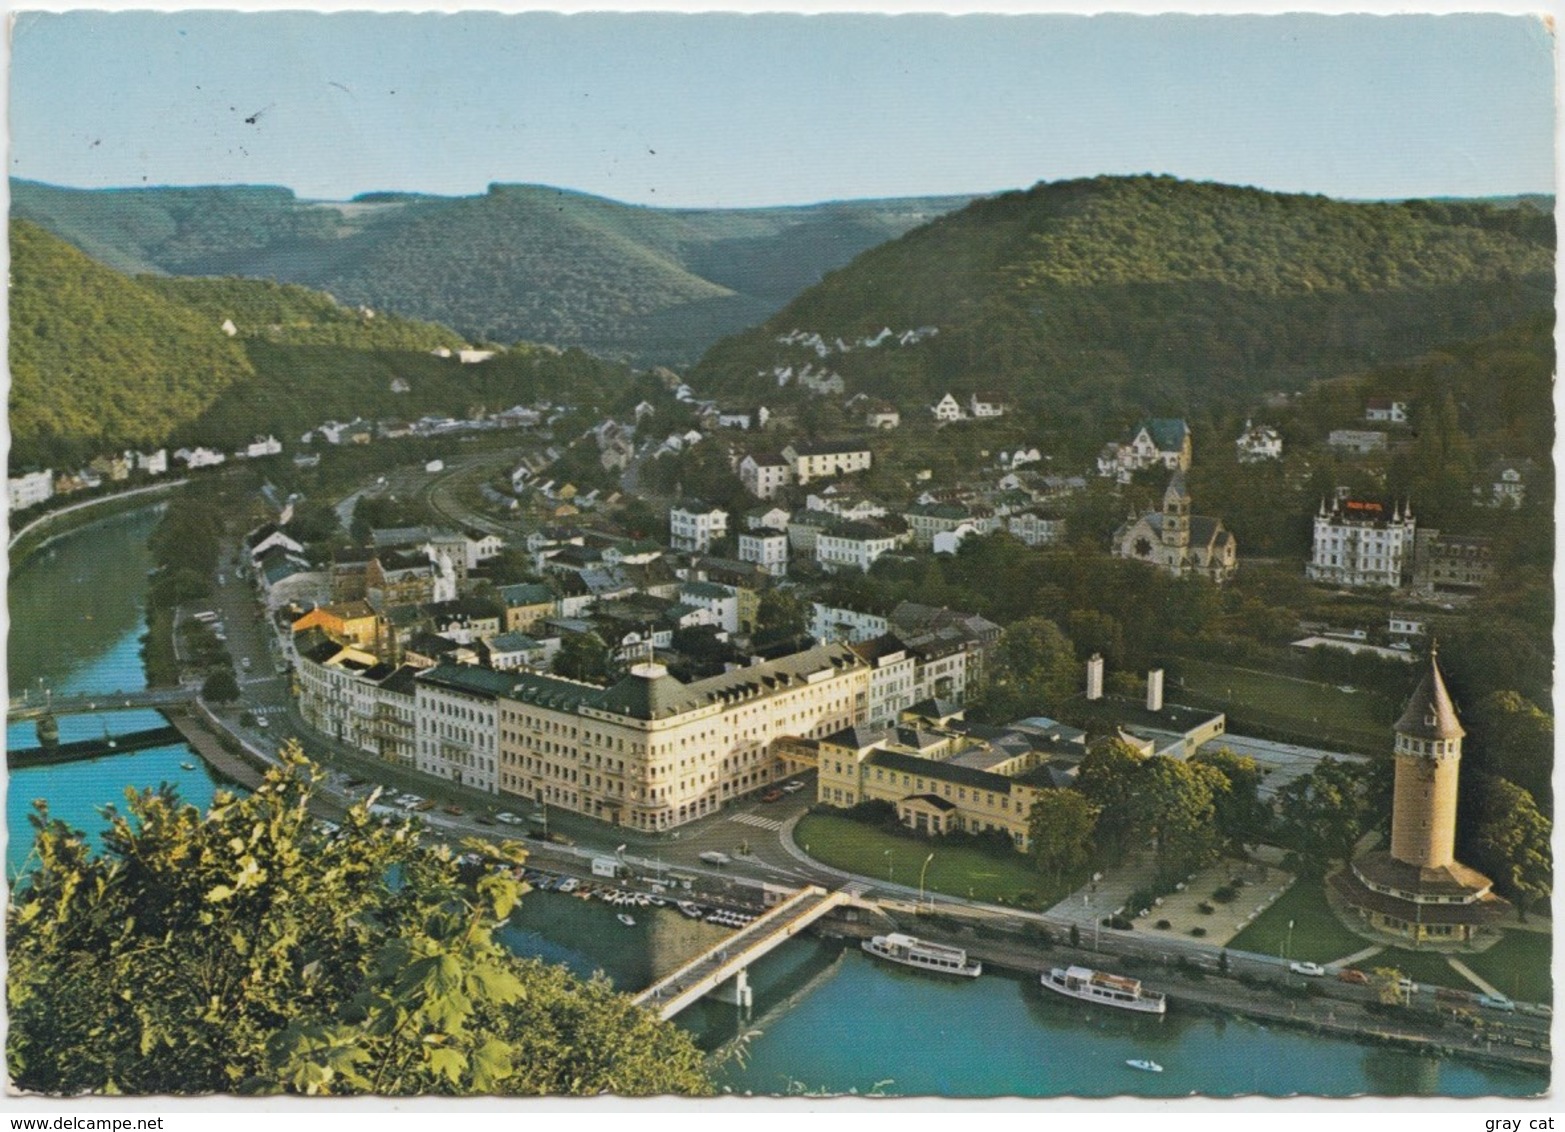 Bad Ems, Germany, 1978 Used Postcard [21389] - Bad Ems